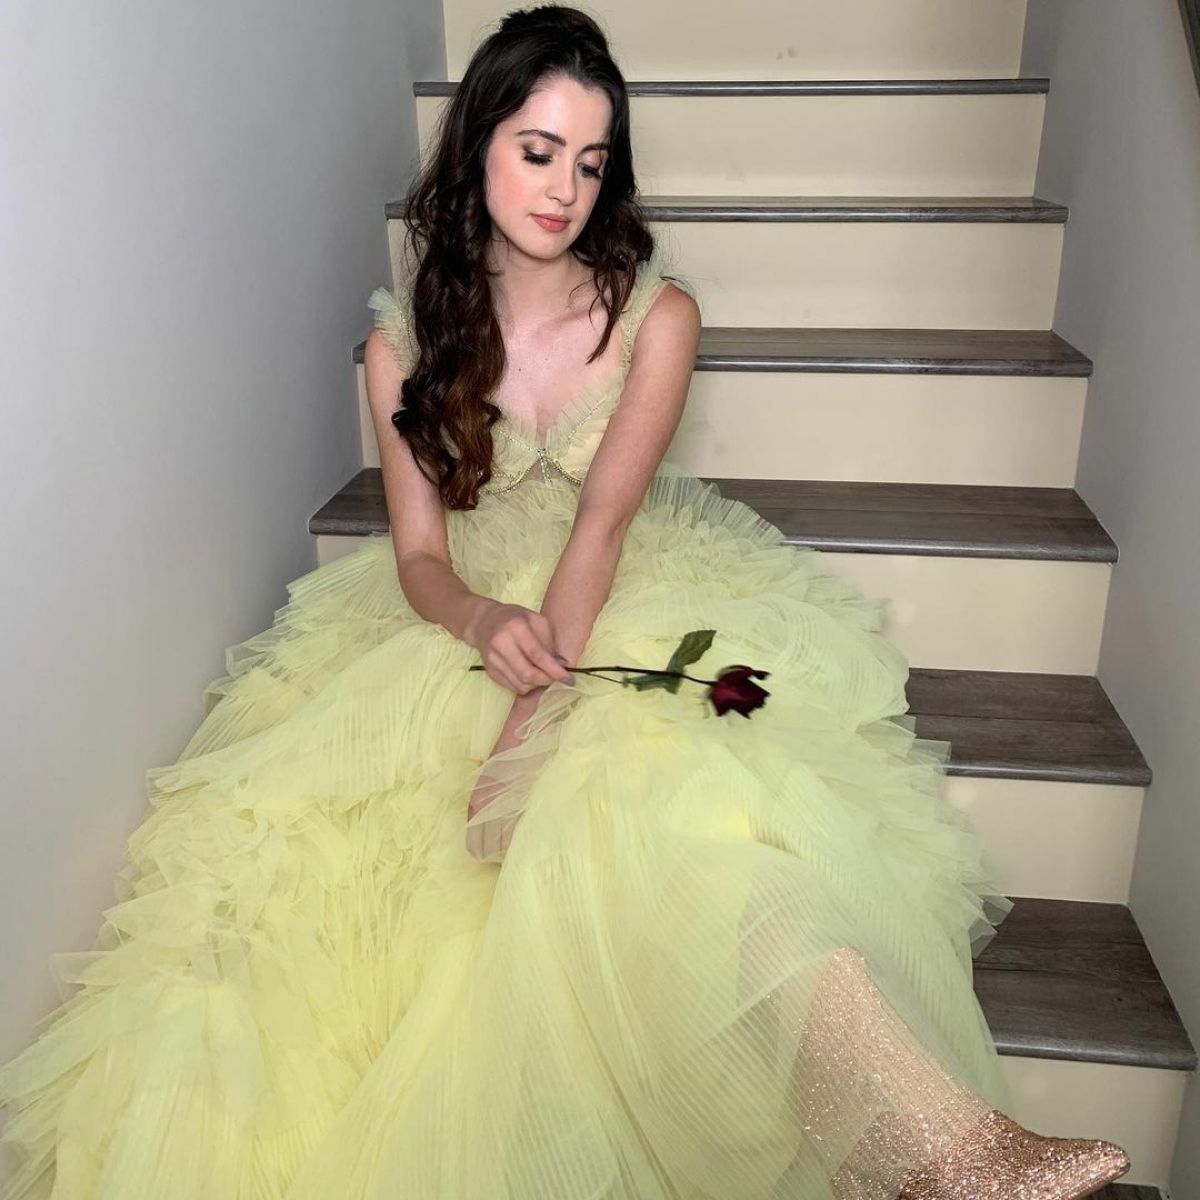 Laura Marano seen in Light Green Stylish Dress in Instagram Photos, Nov 2022